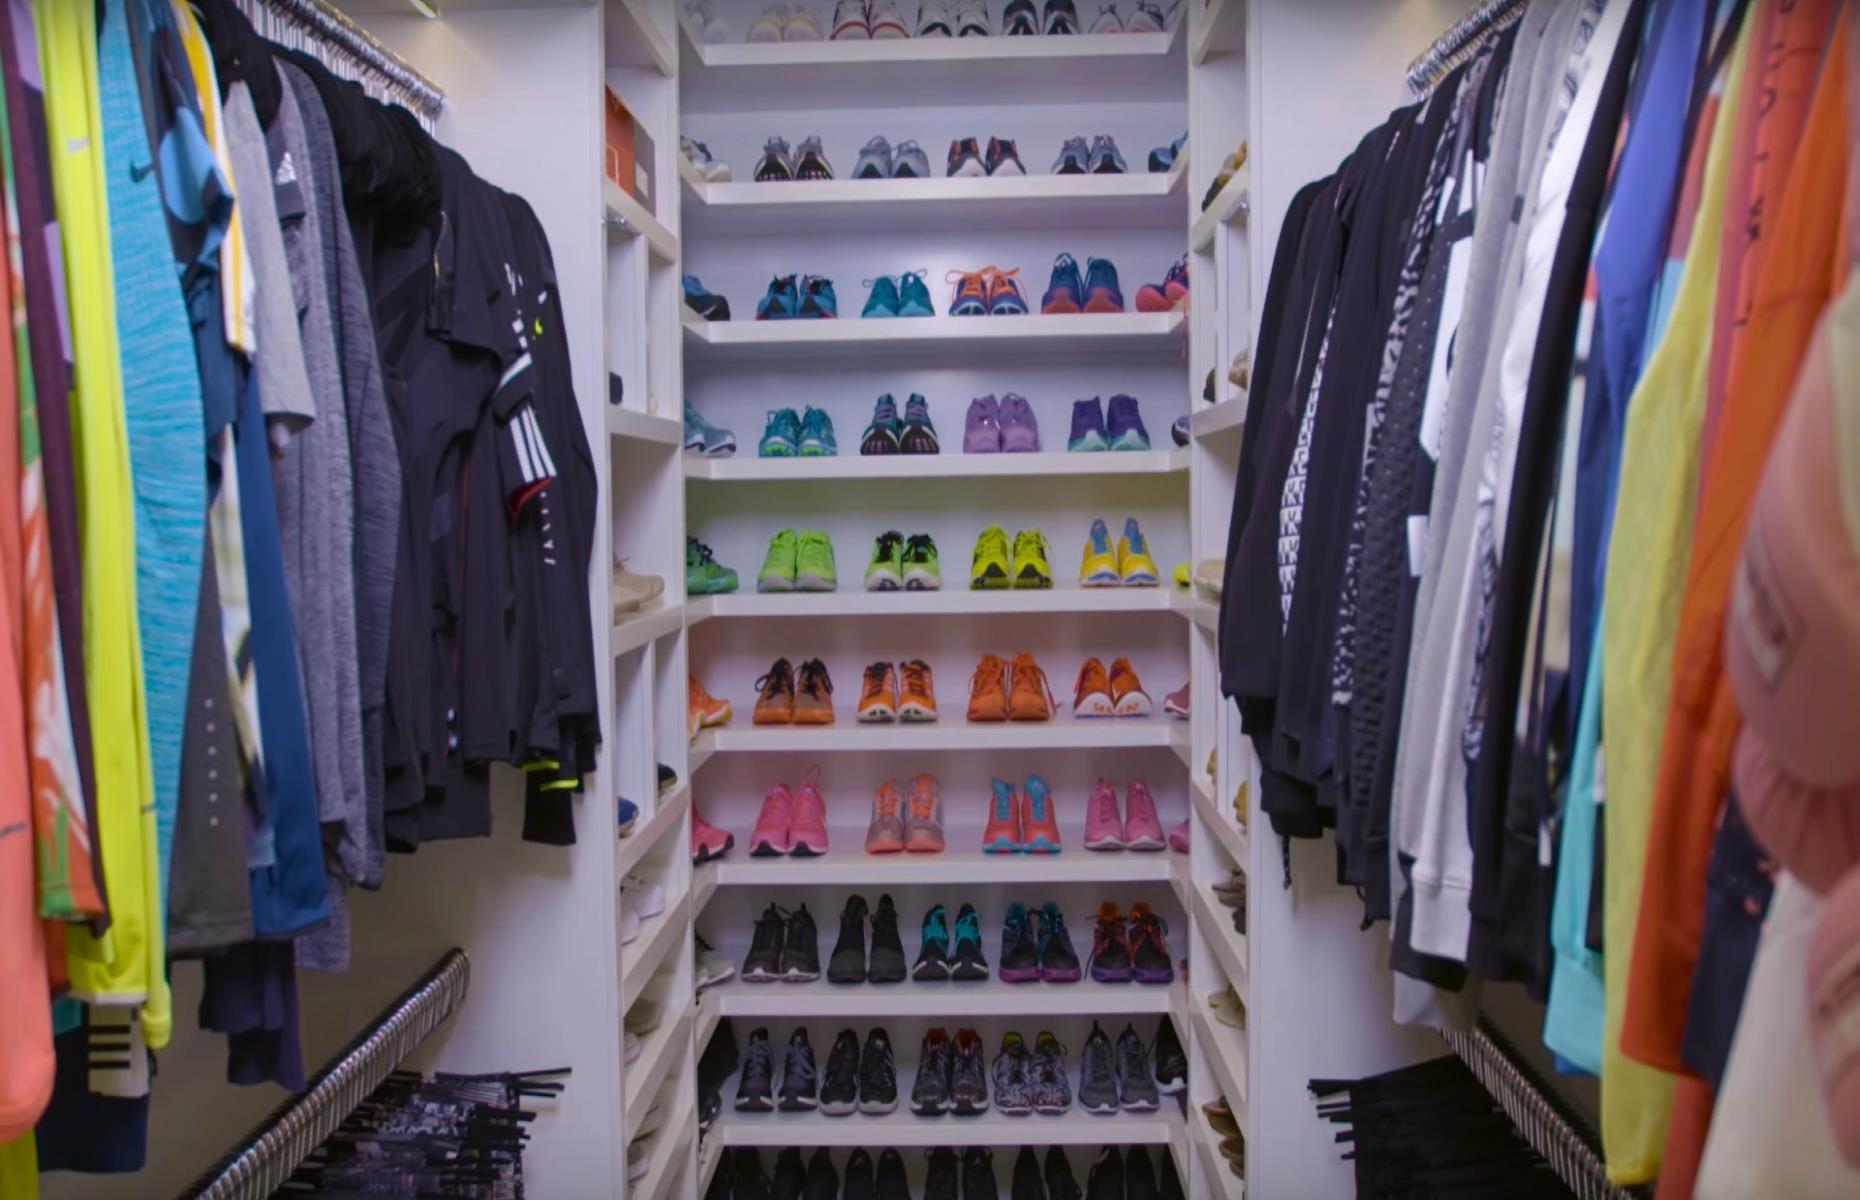 Step inside these celebrity walk-in wardrobes